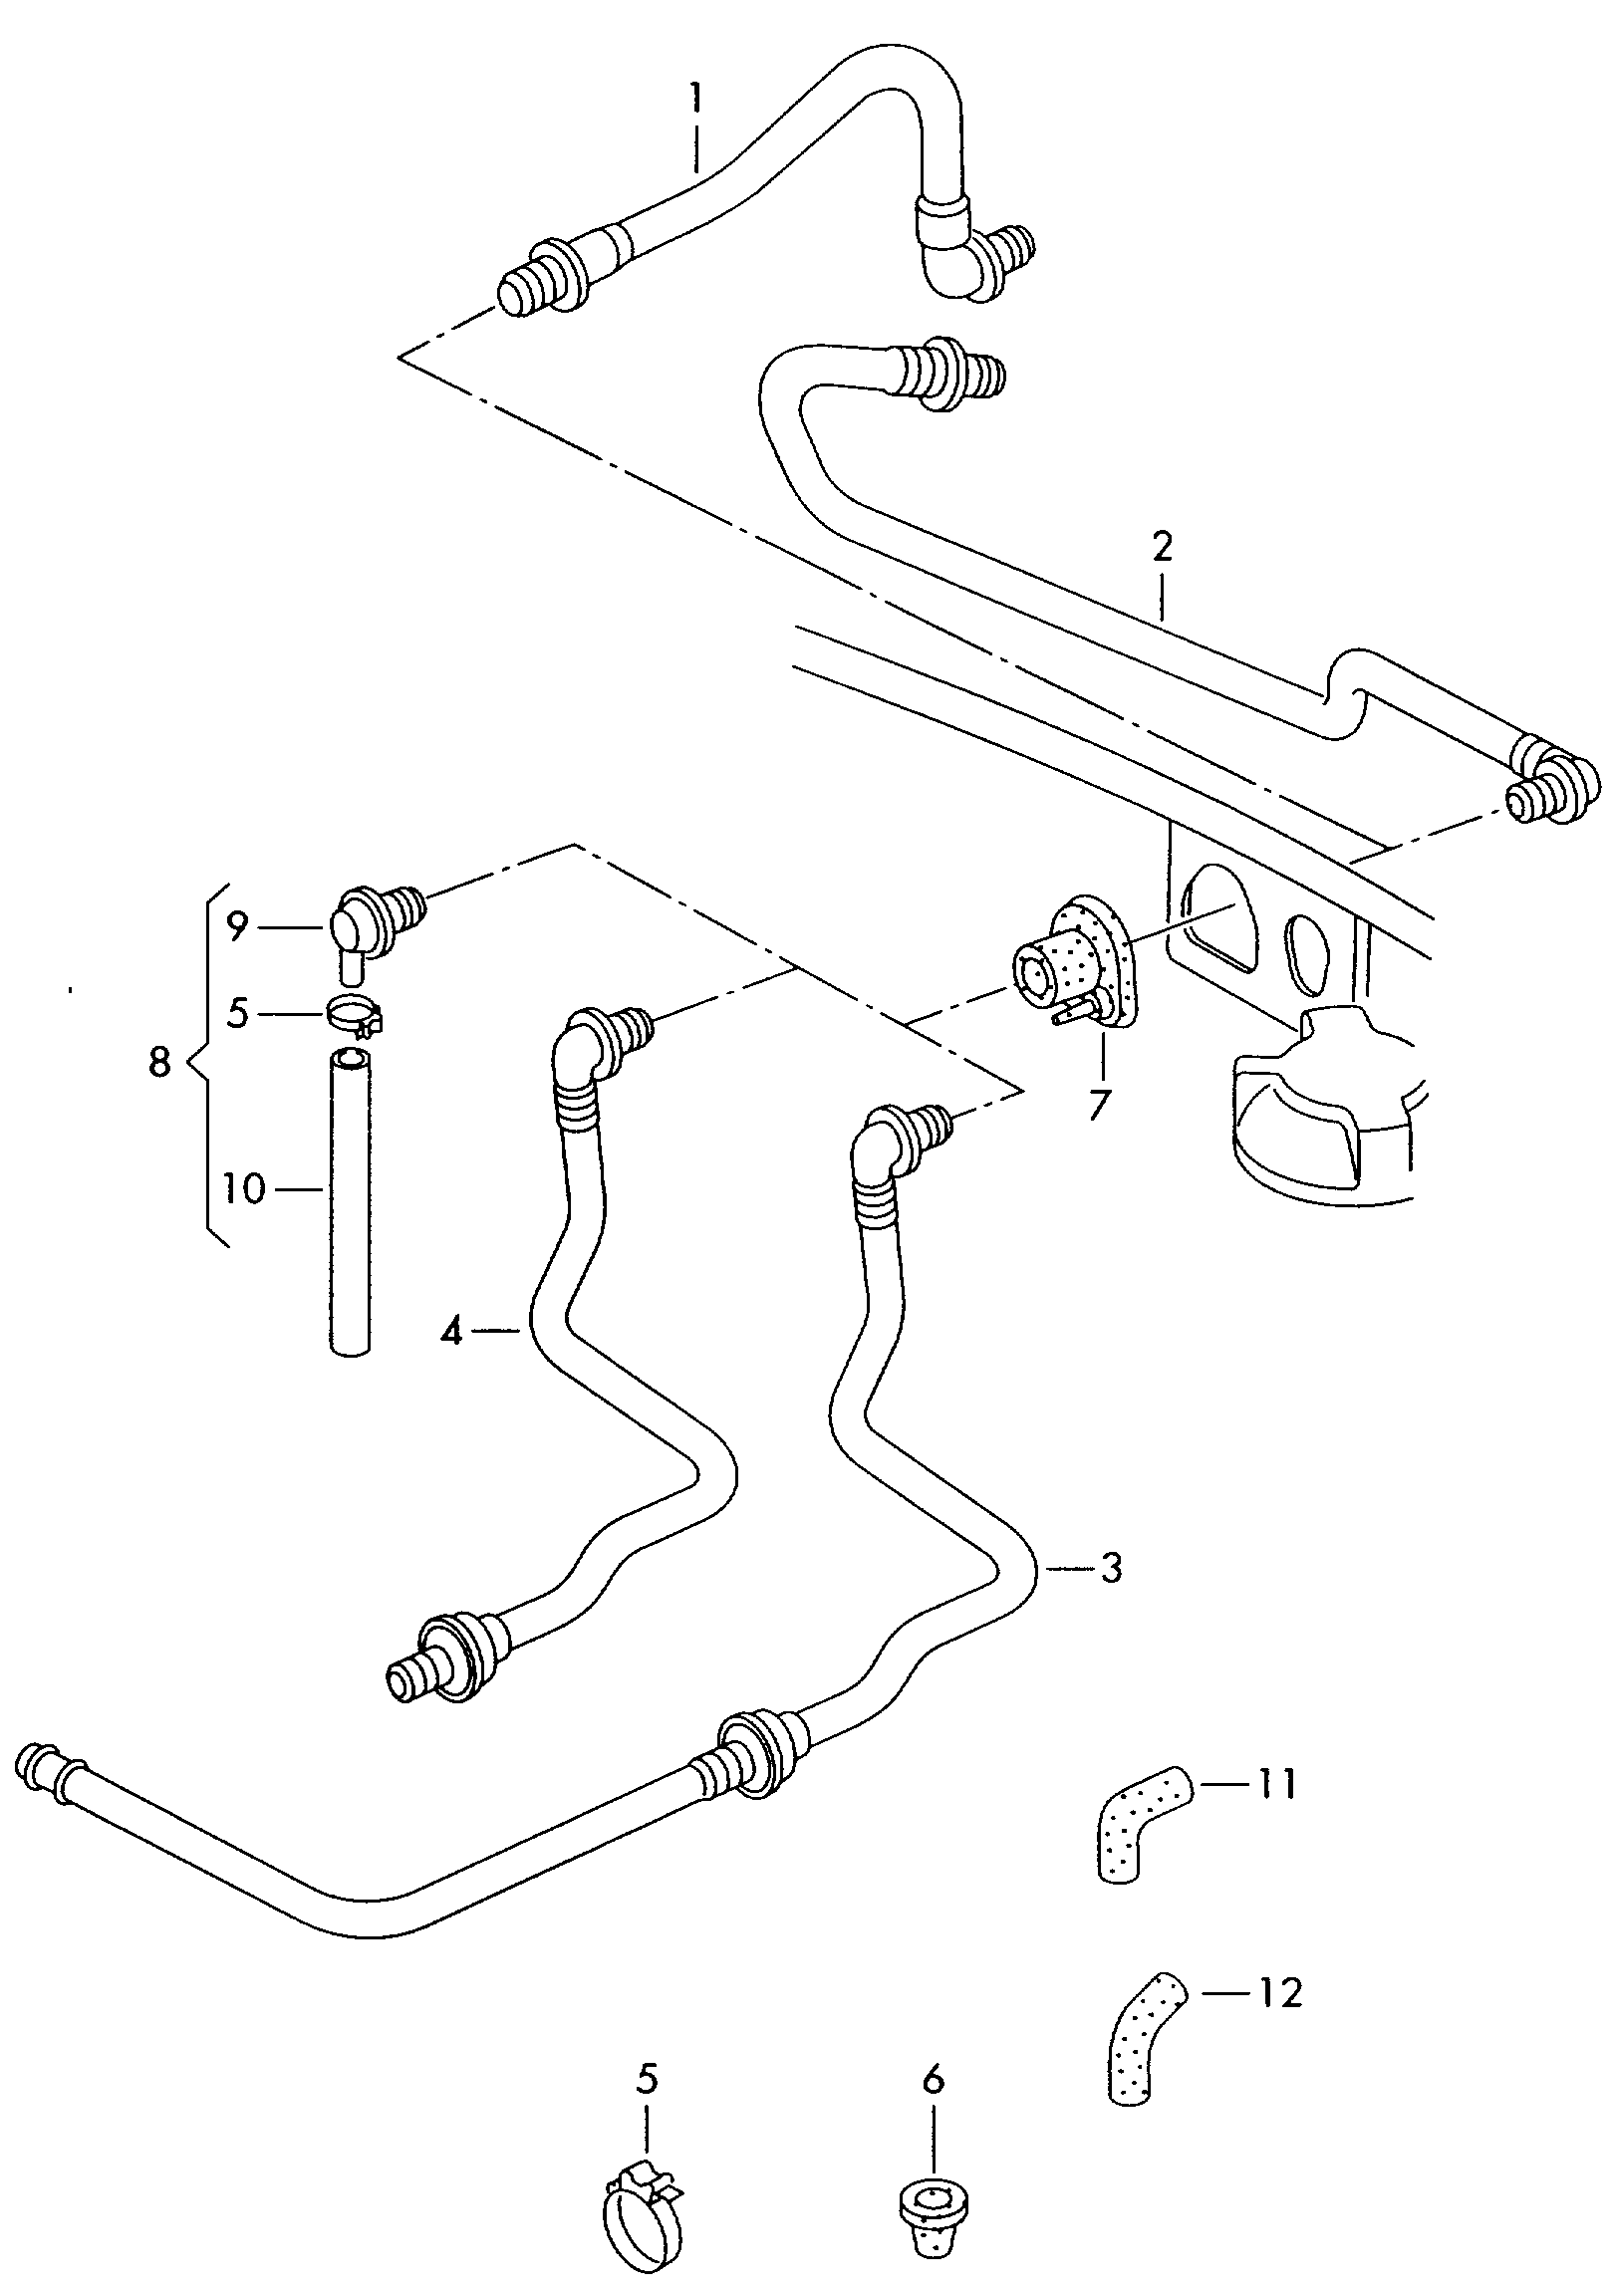 hadice podtlakove pro
podtlakovy posilovac - Audi A6/S6/Avant quattro(A6Q)  